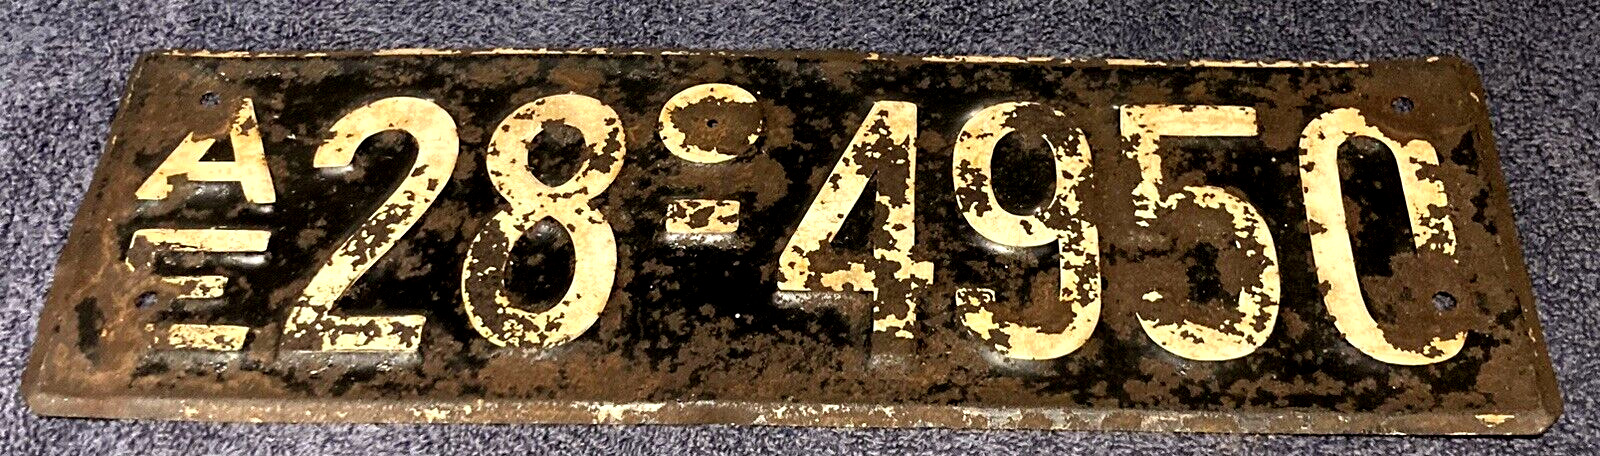 1940s Germany Postwar license plate AMERICAN ZONE Bremen AE 28-4950 German WW2